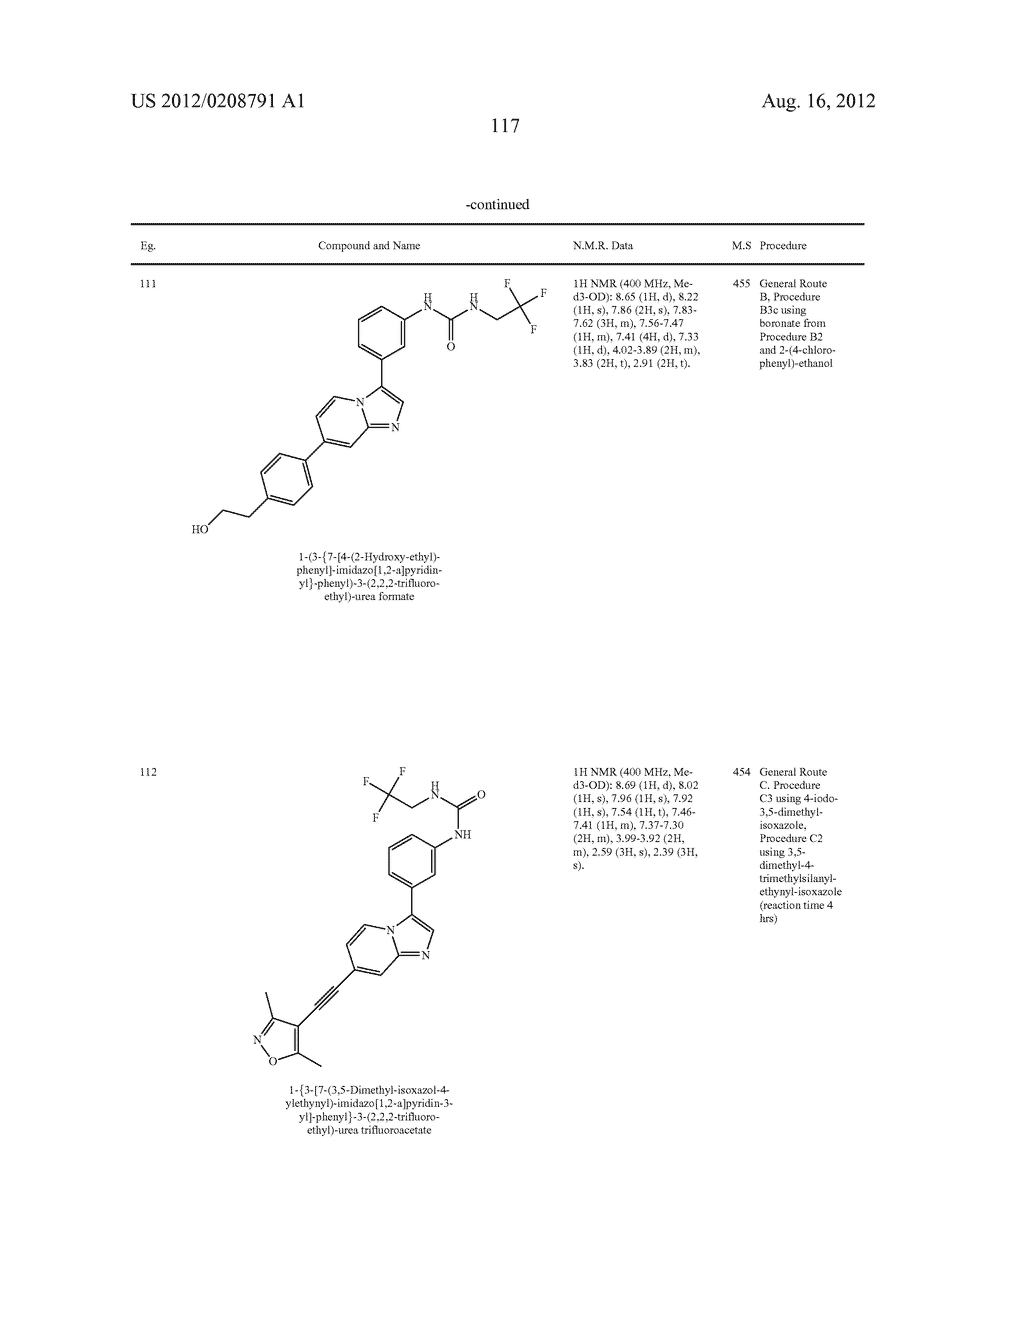 IMIDAZOPYRIDINE DERIVATIVES AS INHIBITORS OF RECEPTOR TYROSINE KINASES - diagram, schematic, and image 118